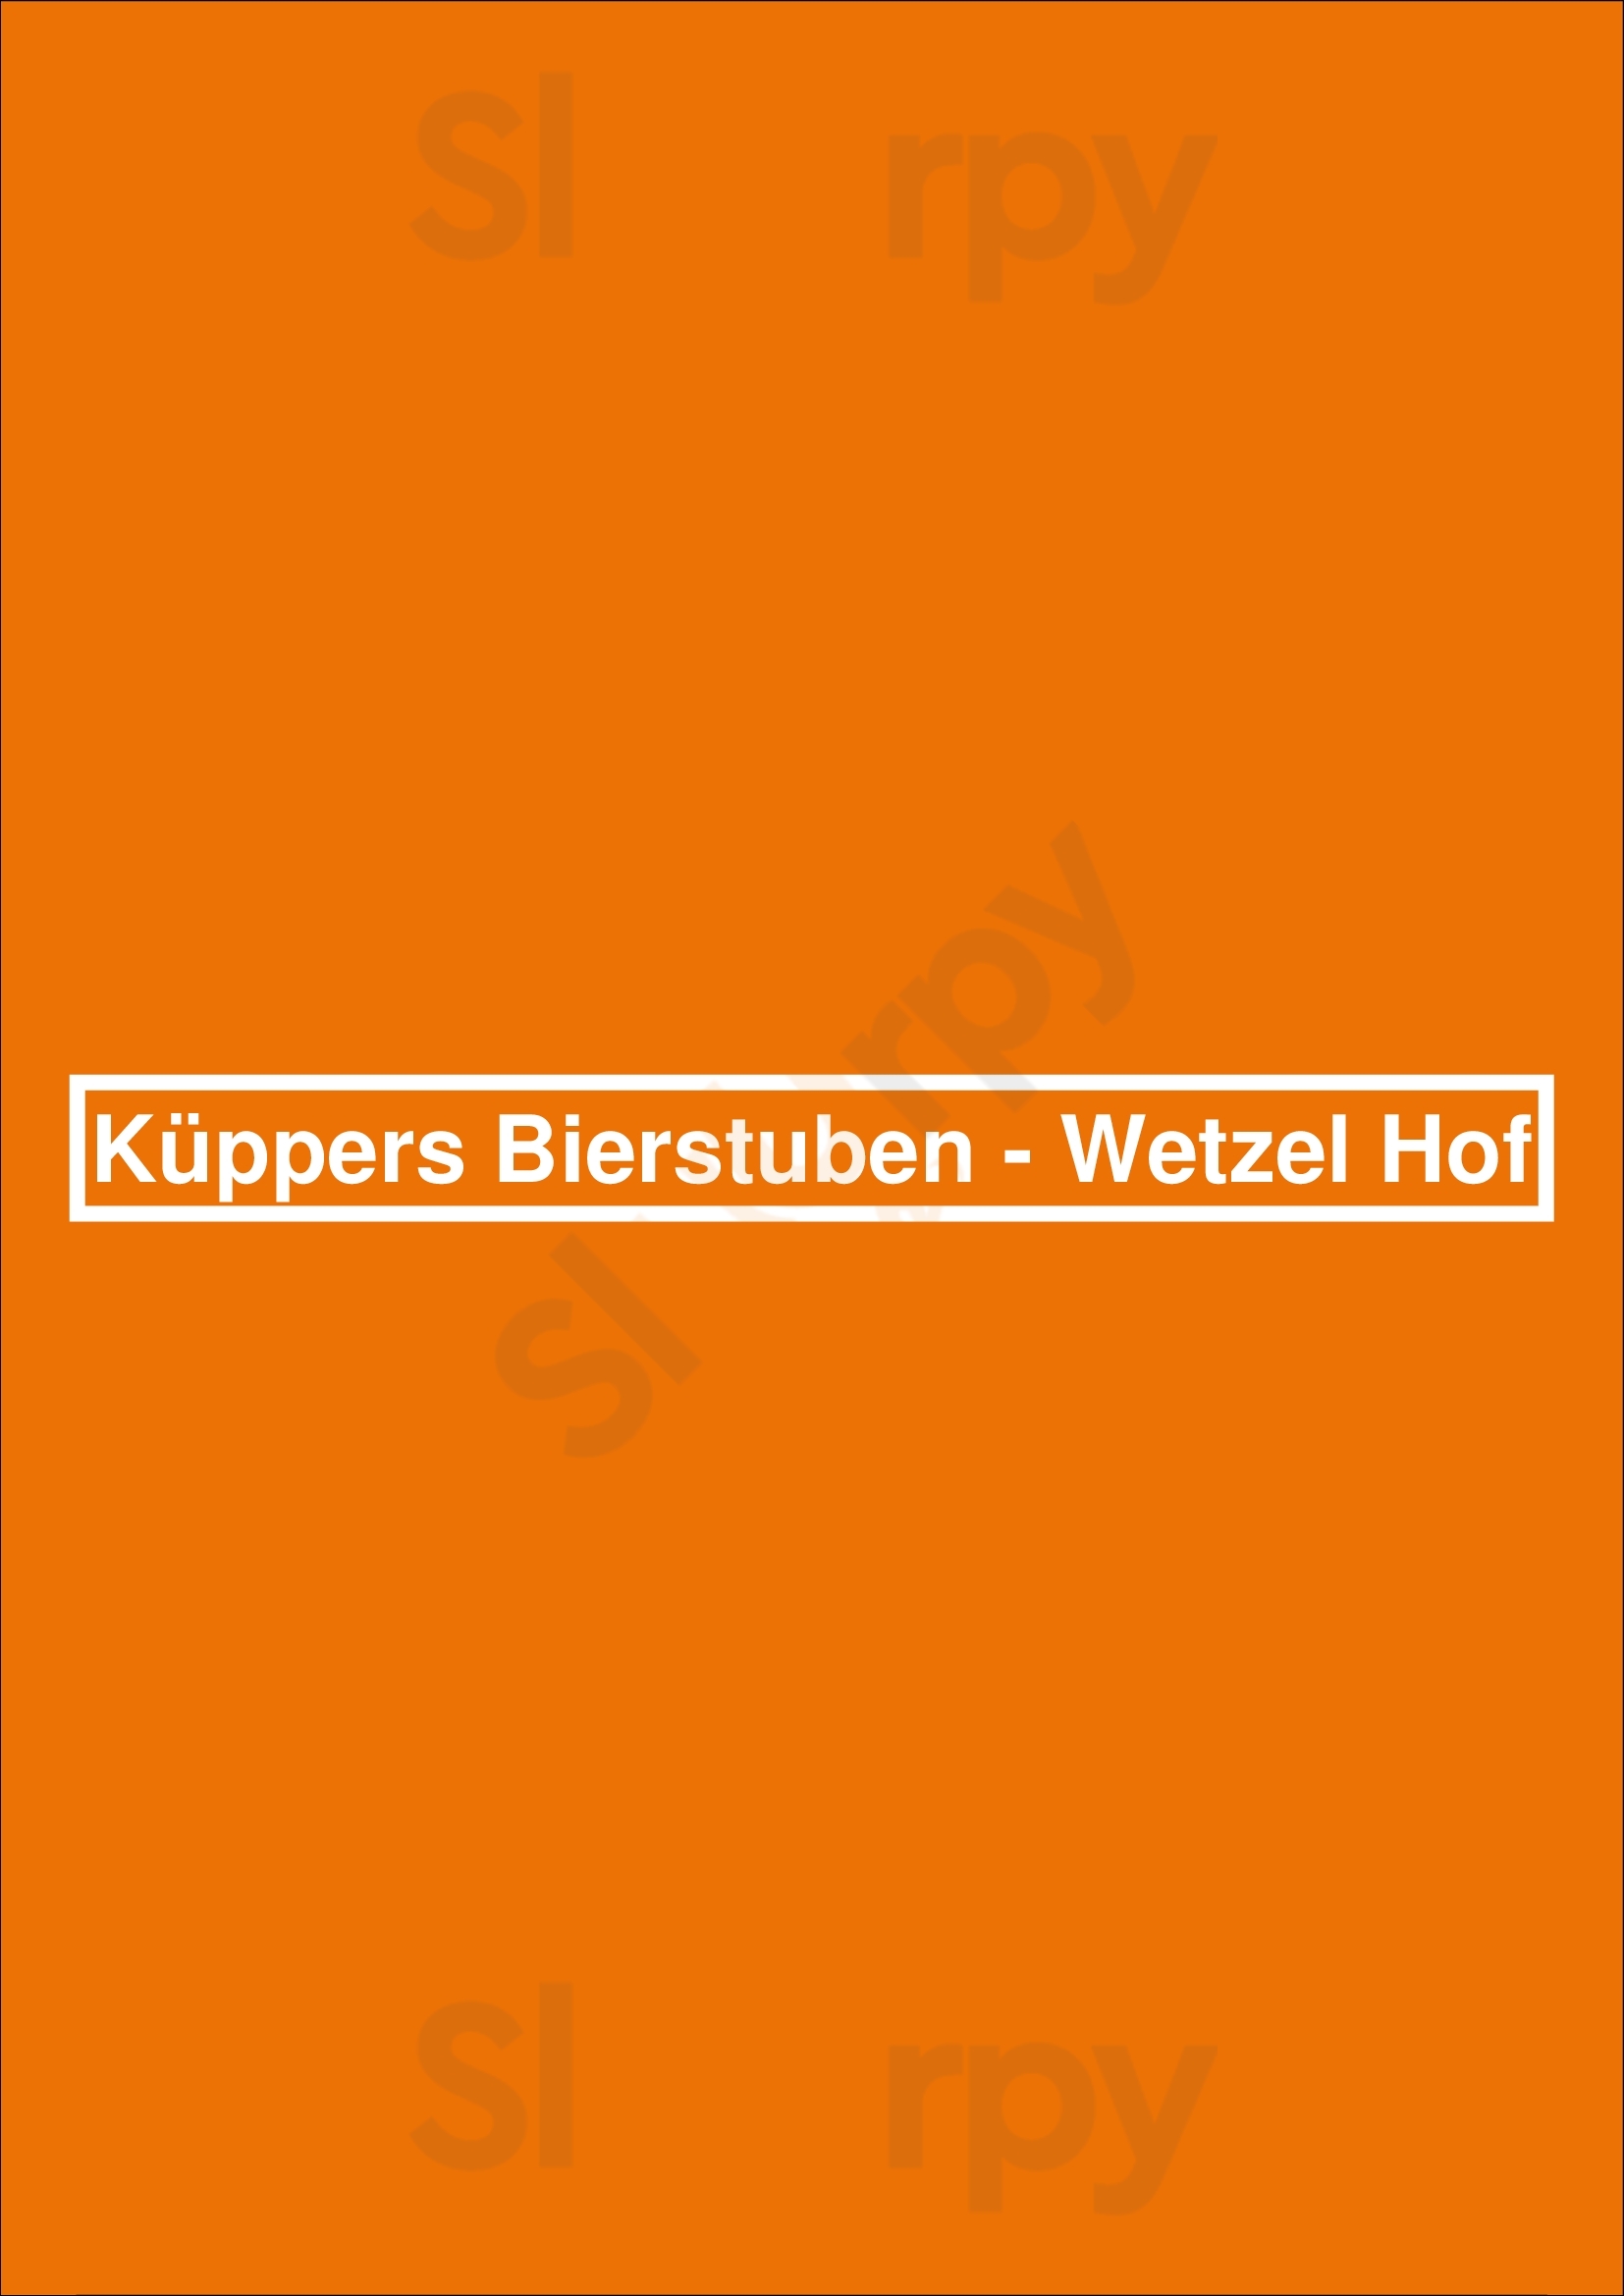 Küppers Bierstuben - Wetzel Hof Düsseldorf Menu - 1